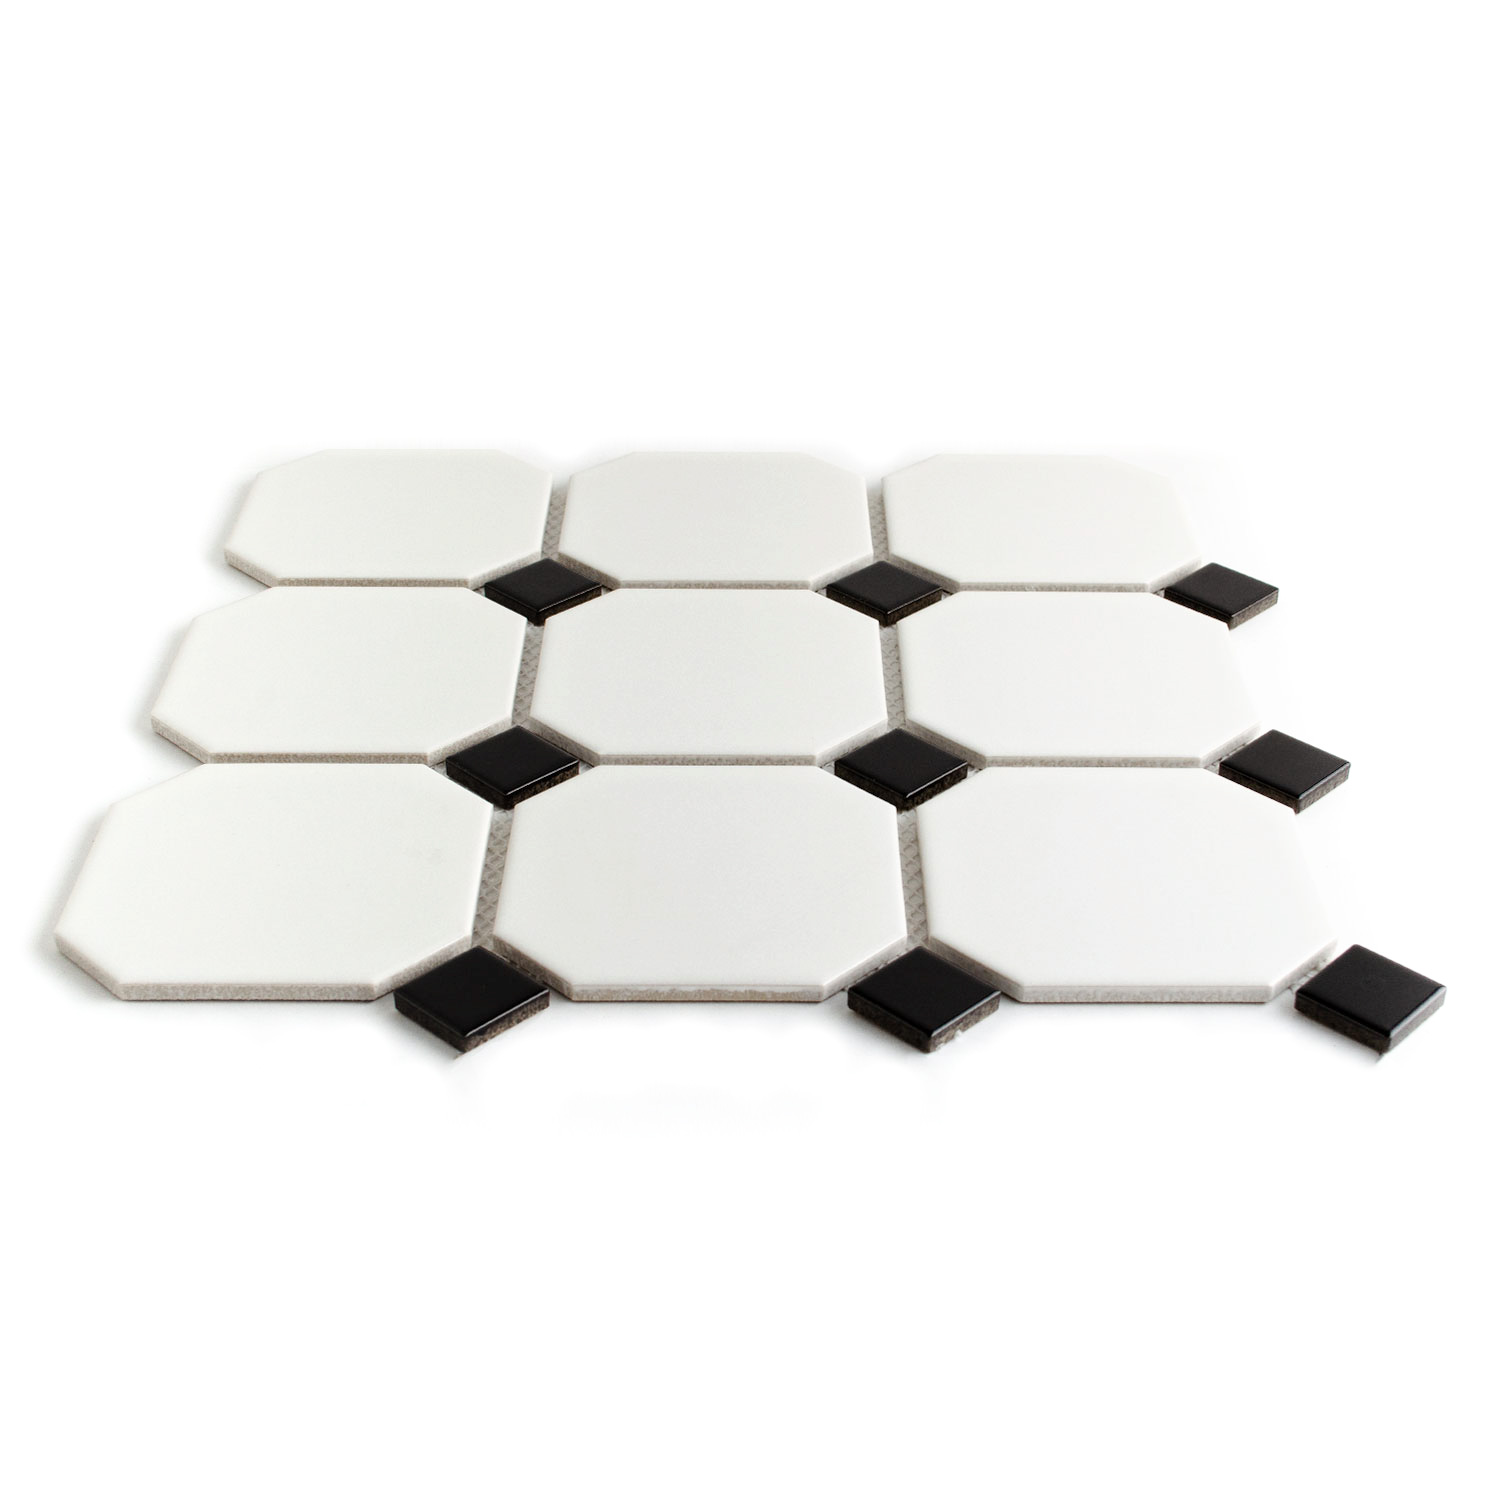 Mosaico in ceramica mosaico esagonale bianco nero confezione Karina